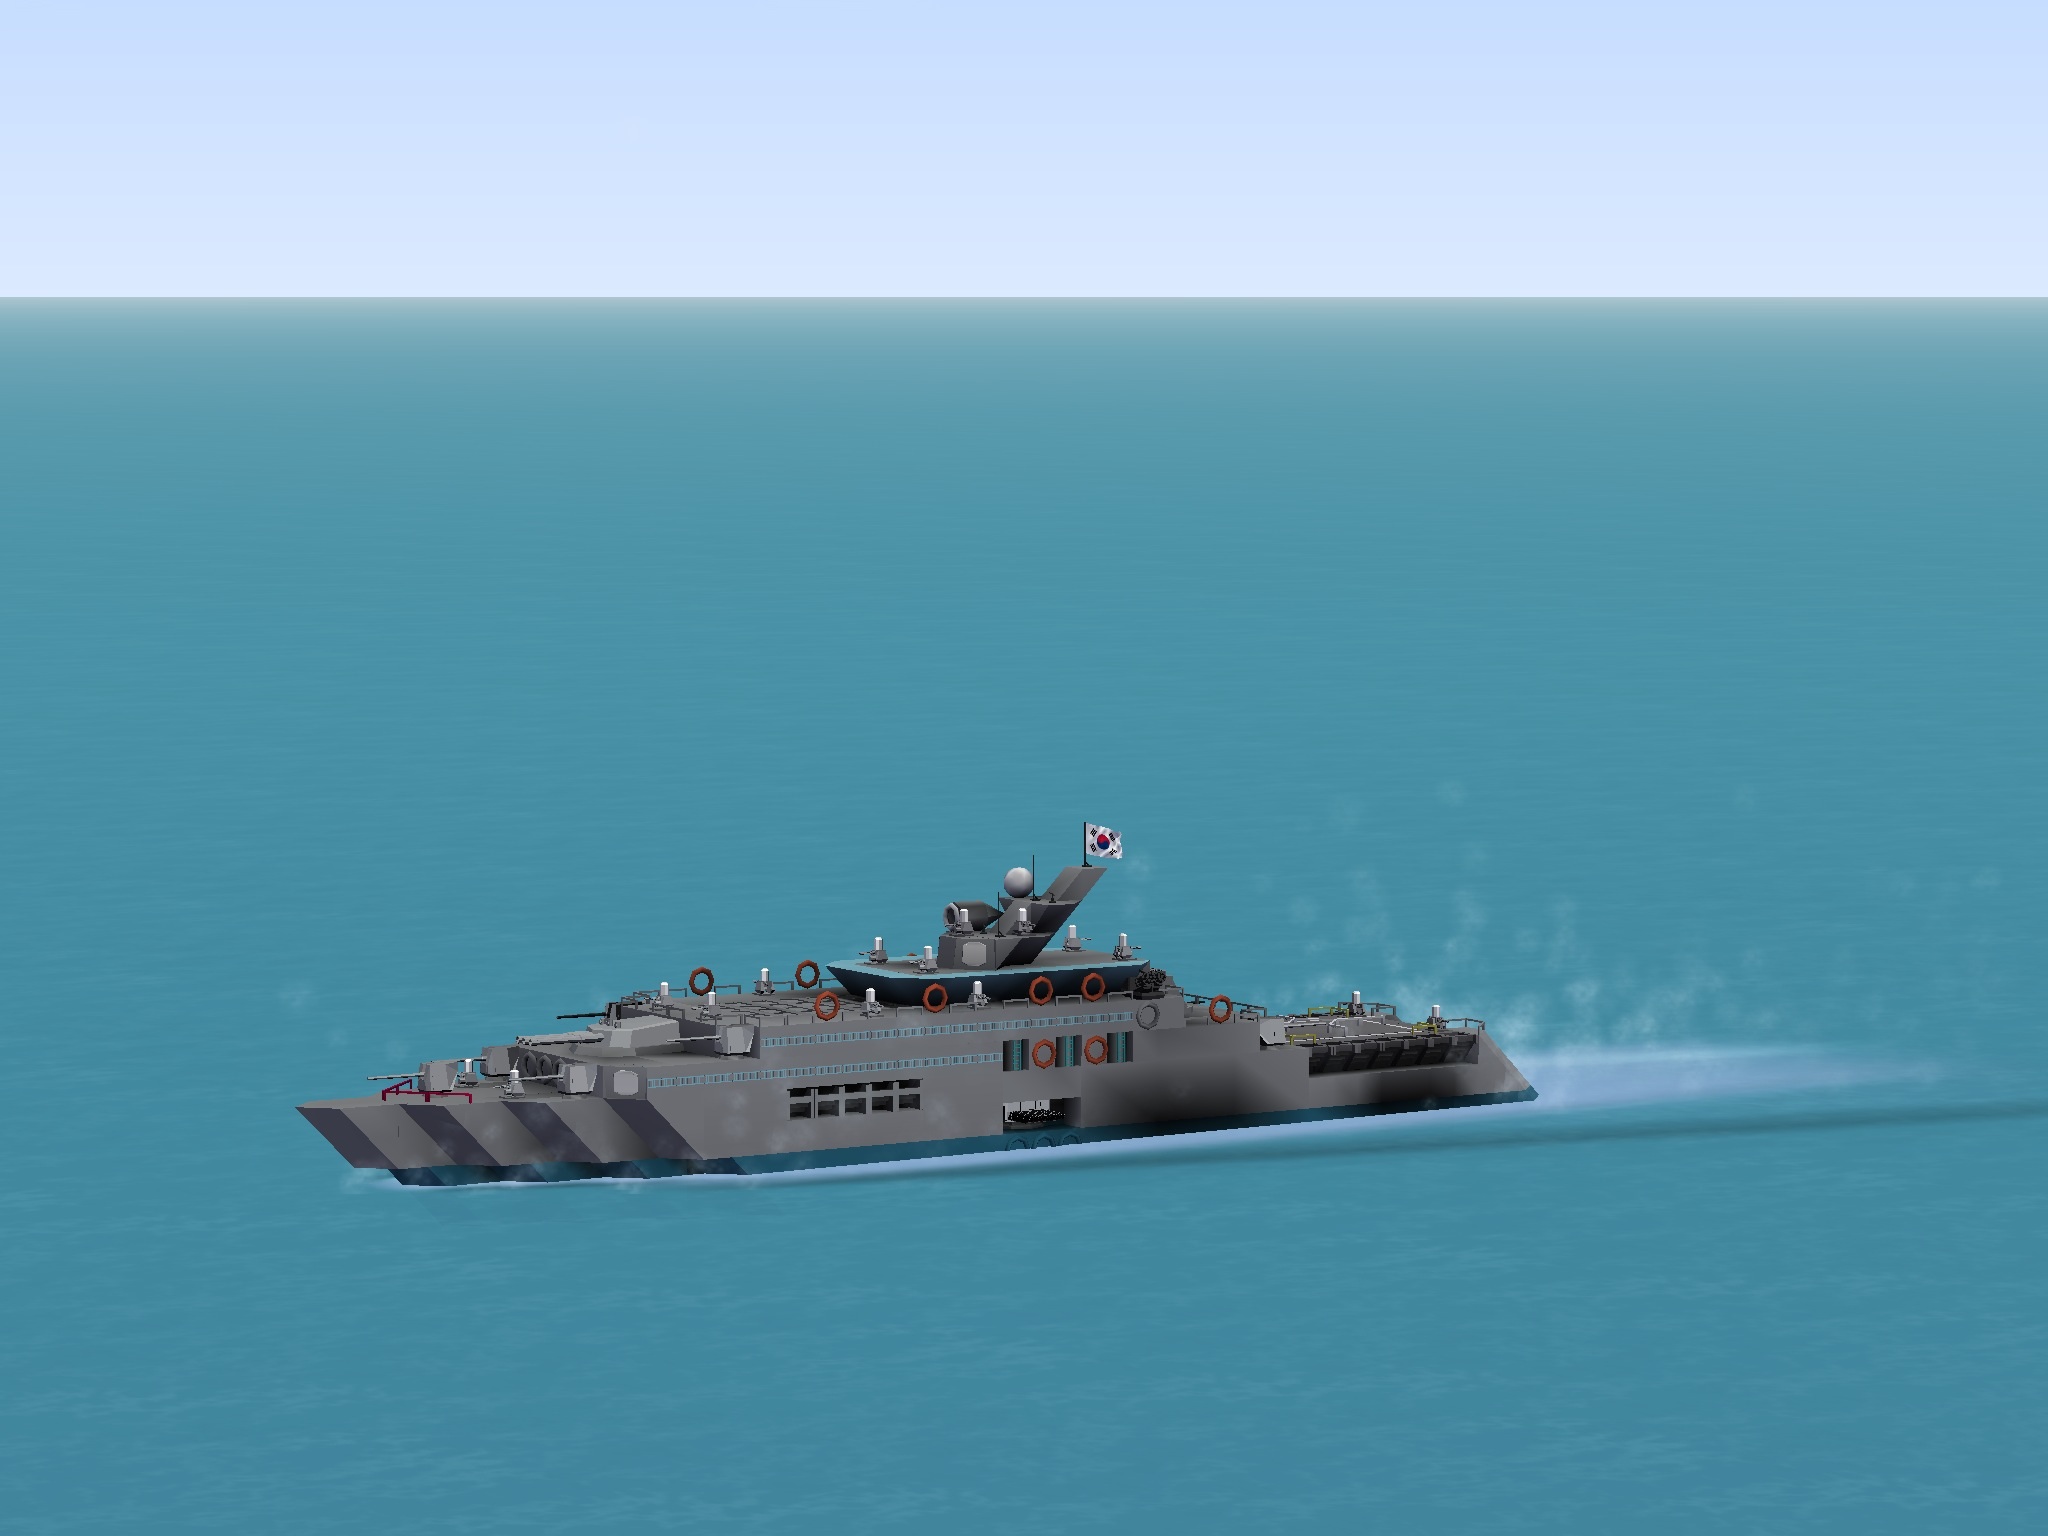 battleship craft download